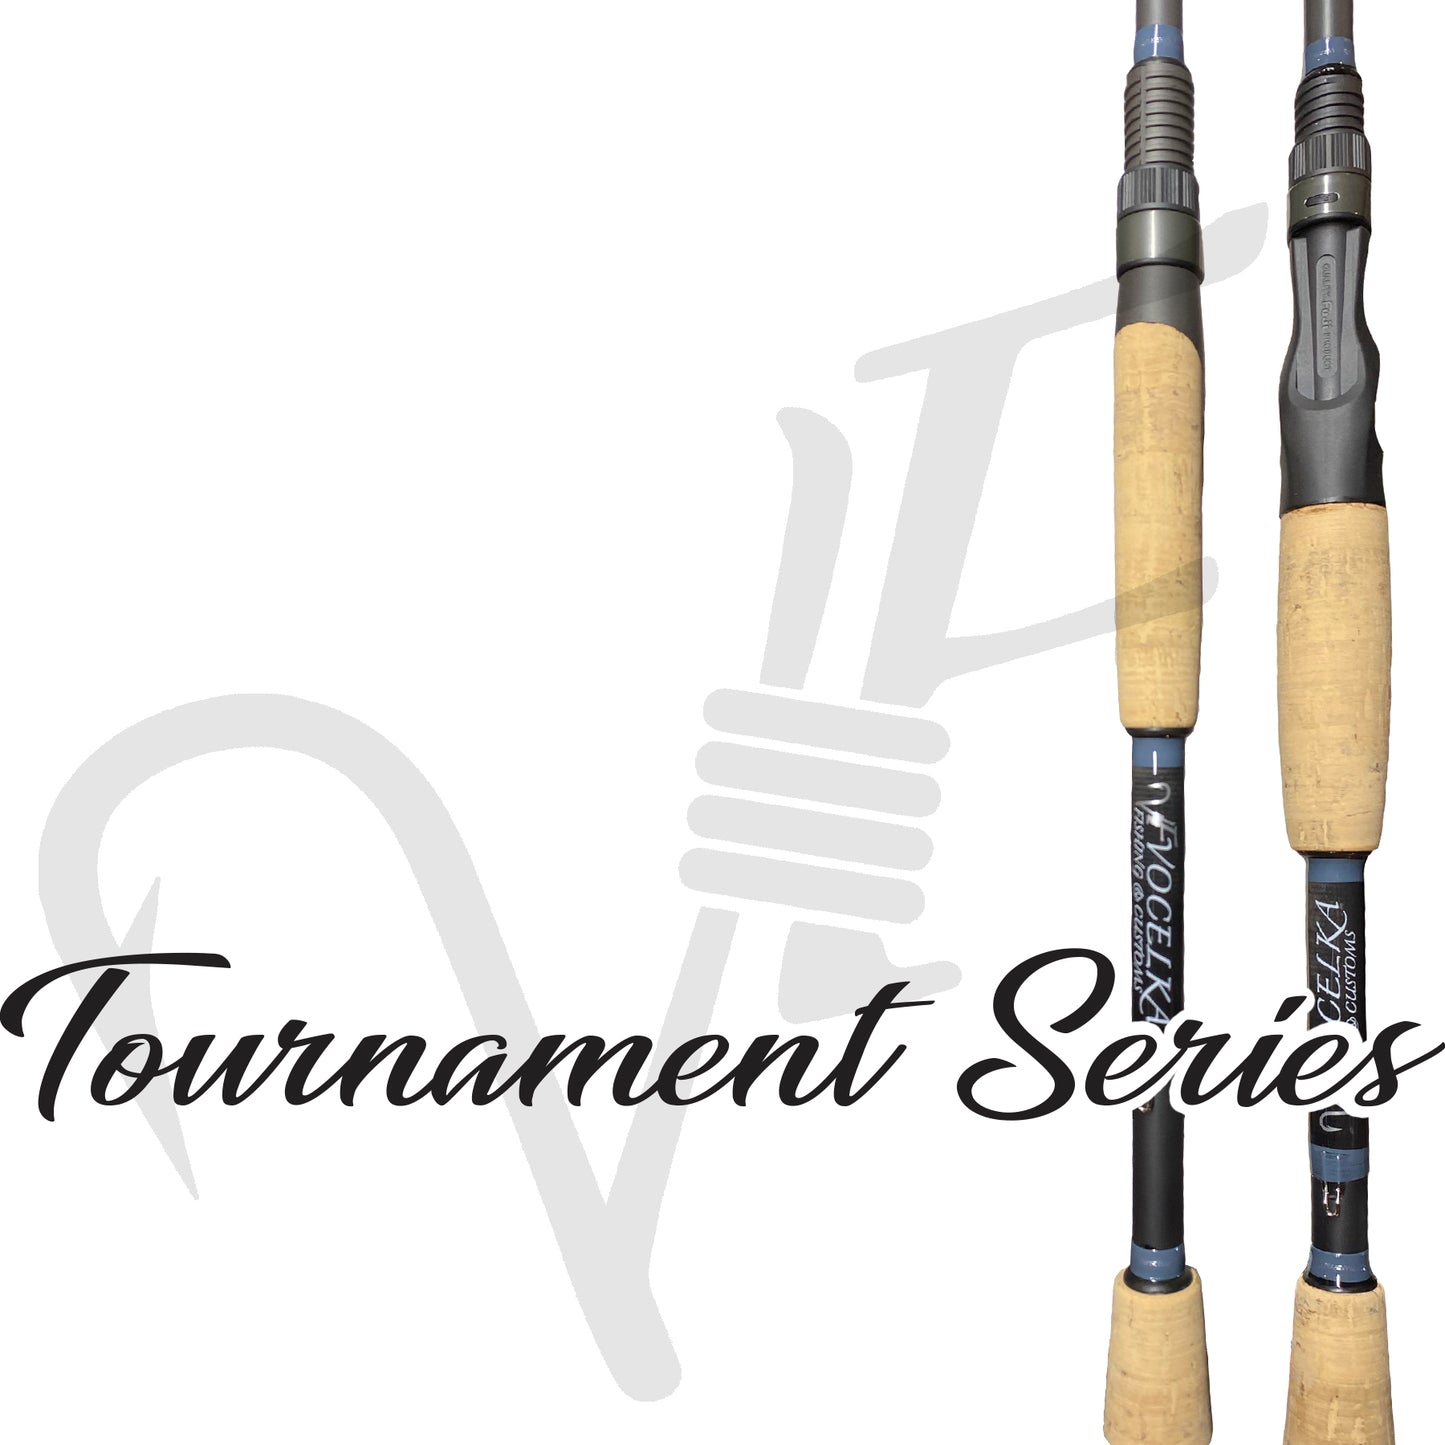 Tournament Series Dock Rod - 7' Casting Heavy F